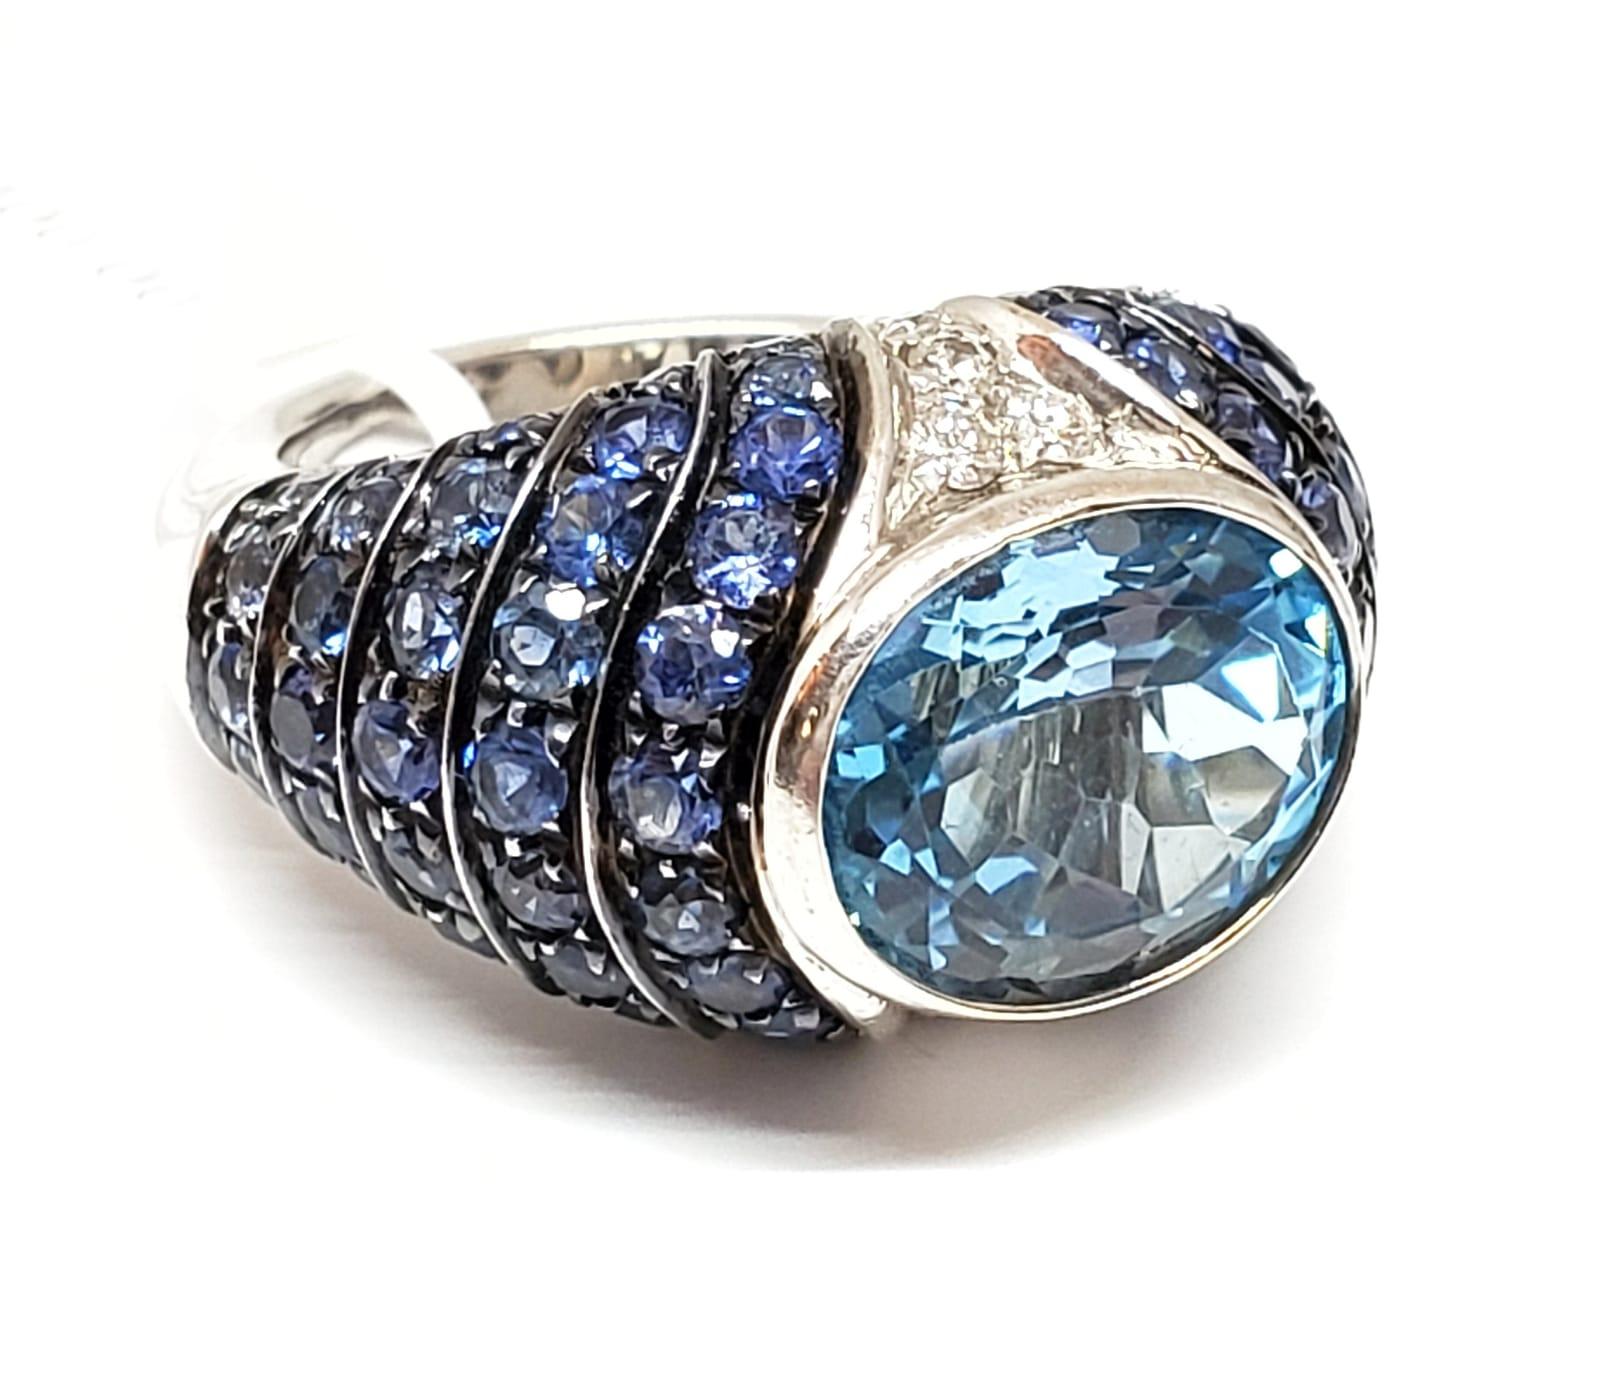 Andreoli Diamond Blue Topaz Sapphire 18 Karat White Gold Ring

This ring features:
- 0.19 Carat Diamond
- Blue Topaz
- Blue Sapphire
- 15.15 Gram 18K White Gold
- Made In Italy